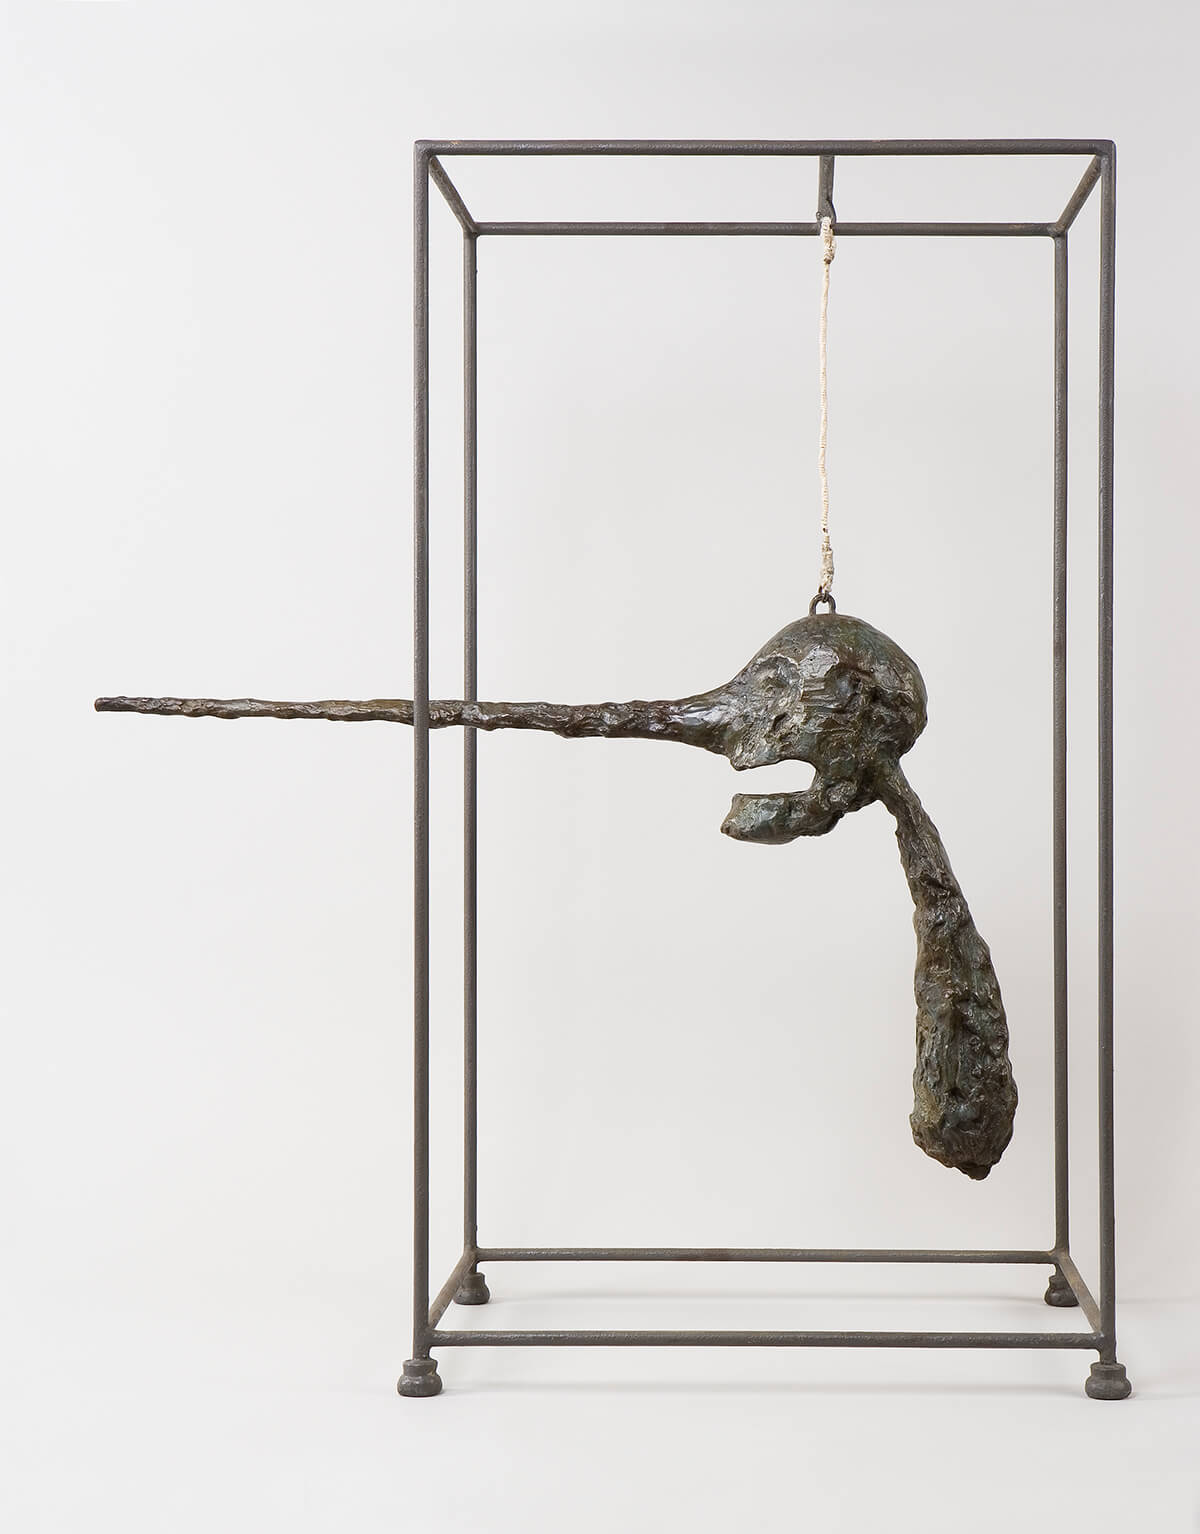 The Nose sculpture by artist Alberto Giacometti